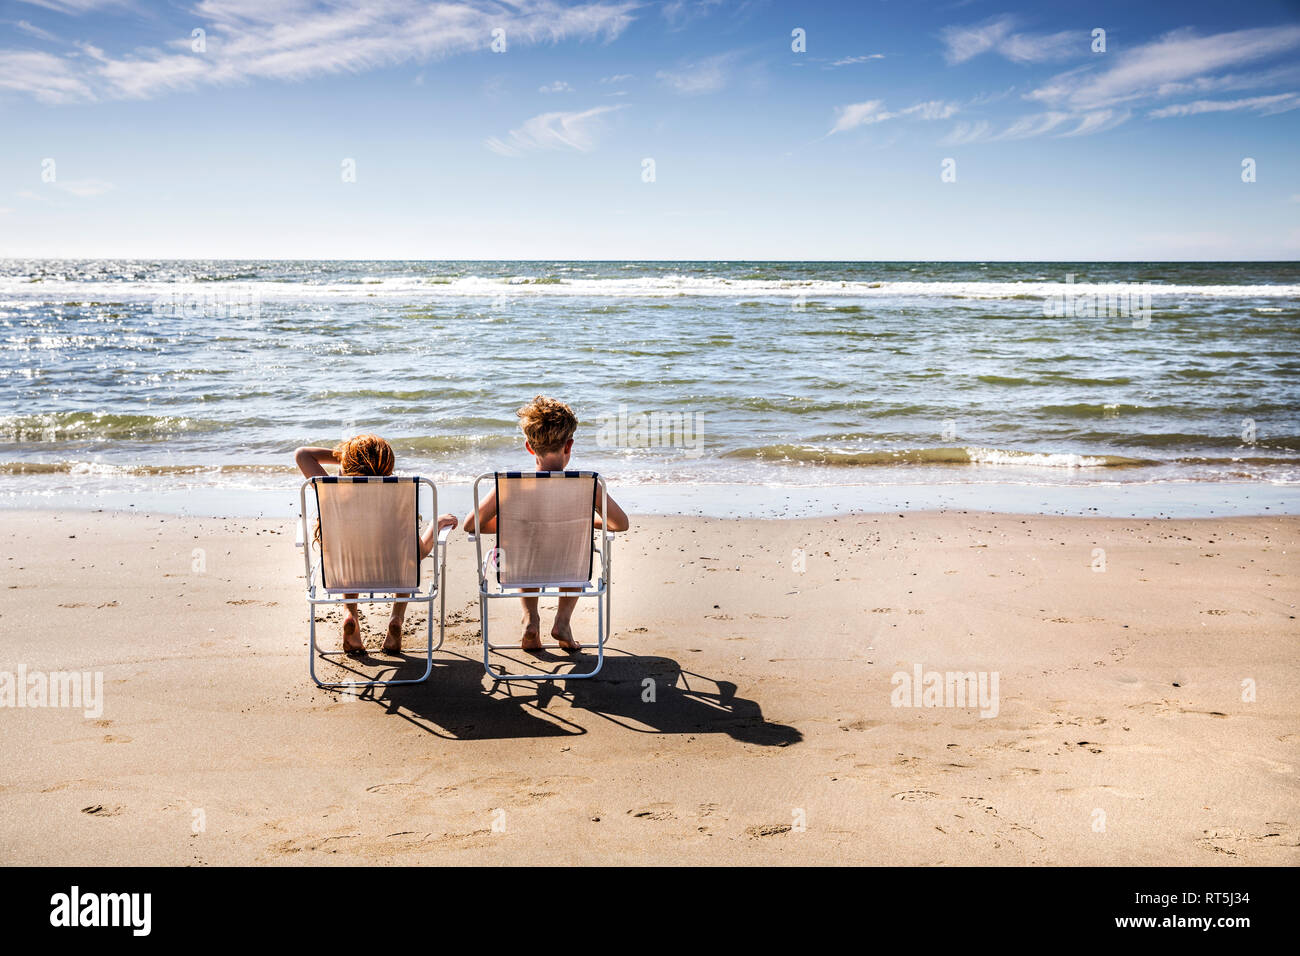 Netherlands, Zandvoort, boy and girl sitting on chairs on the beach Stock Photo